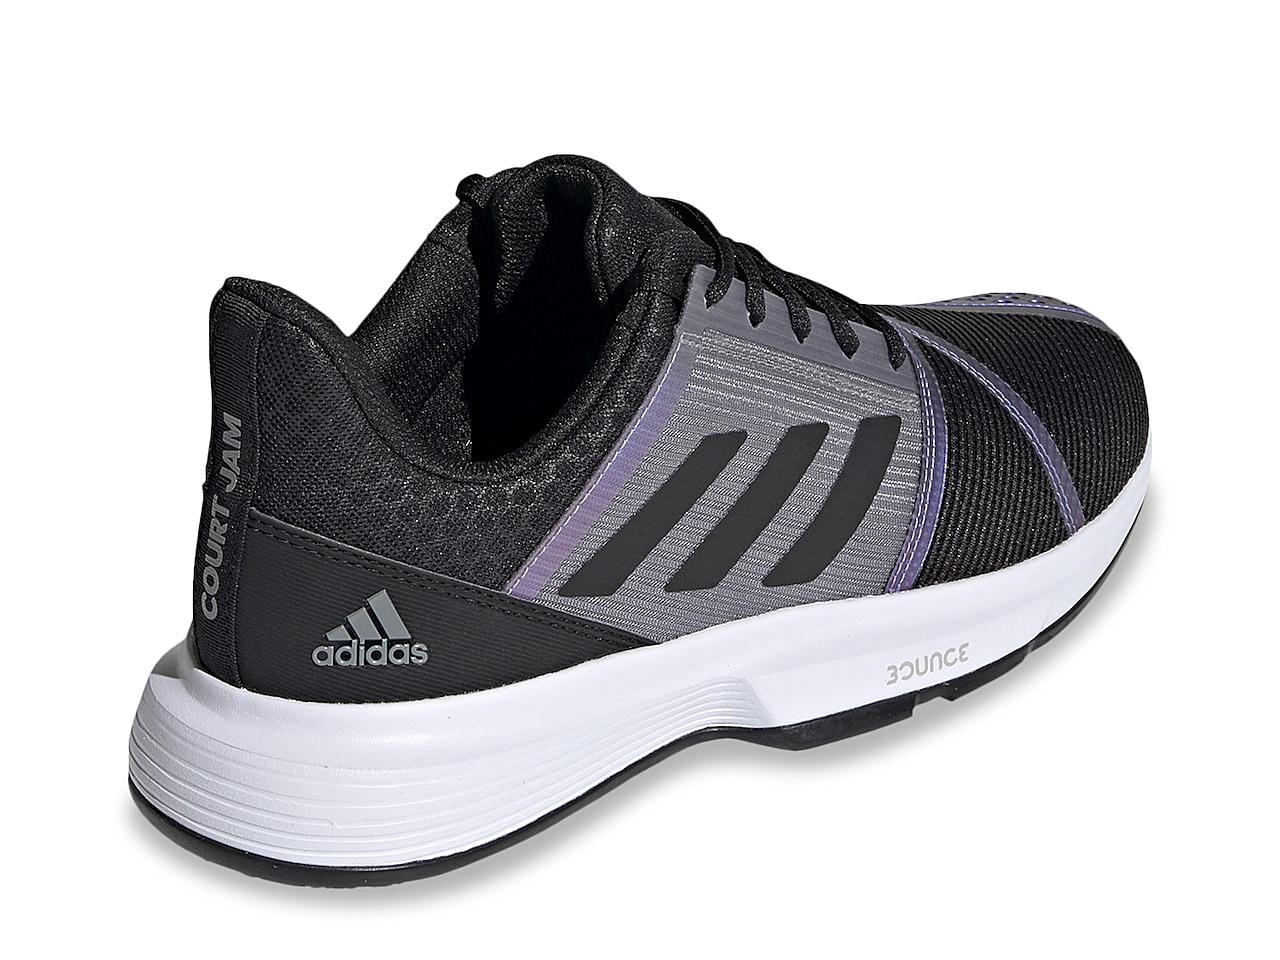 adidas Courtjam Bounce Sneaker in Black/Grey/Purple (Black) for Men - Lyst